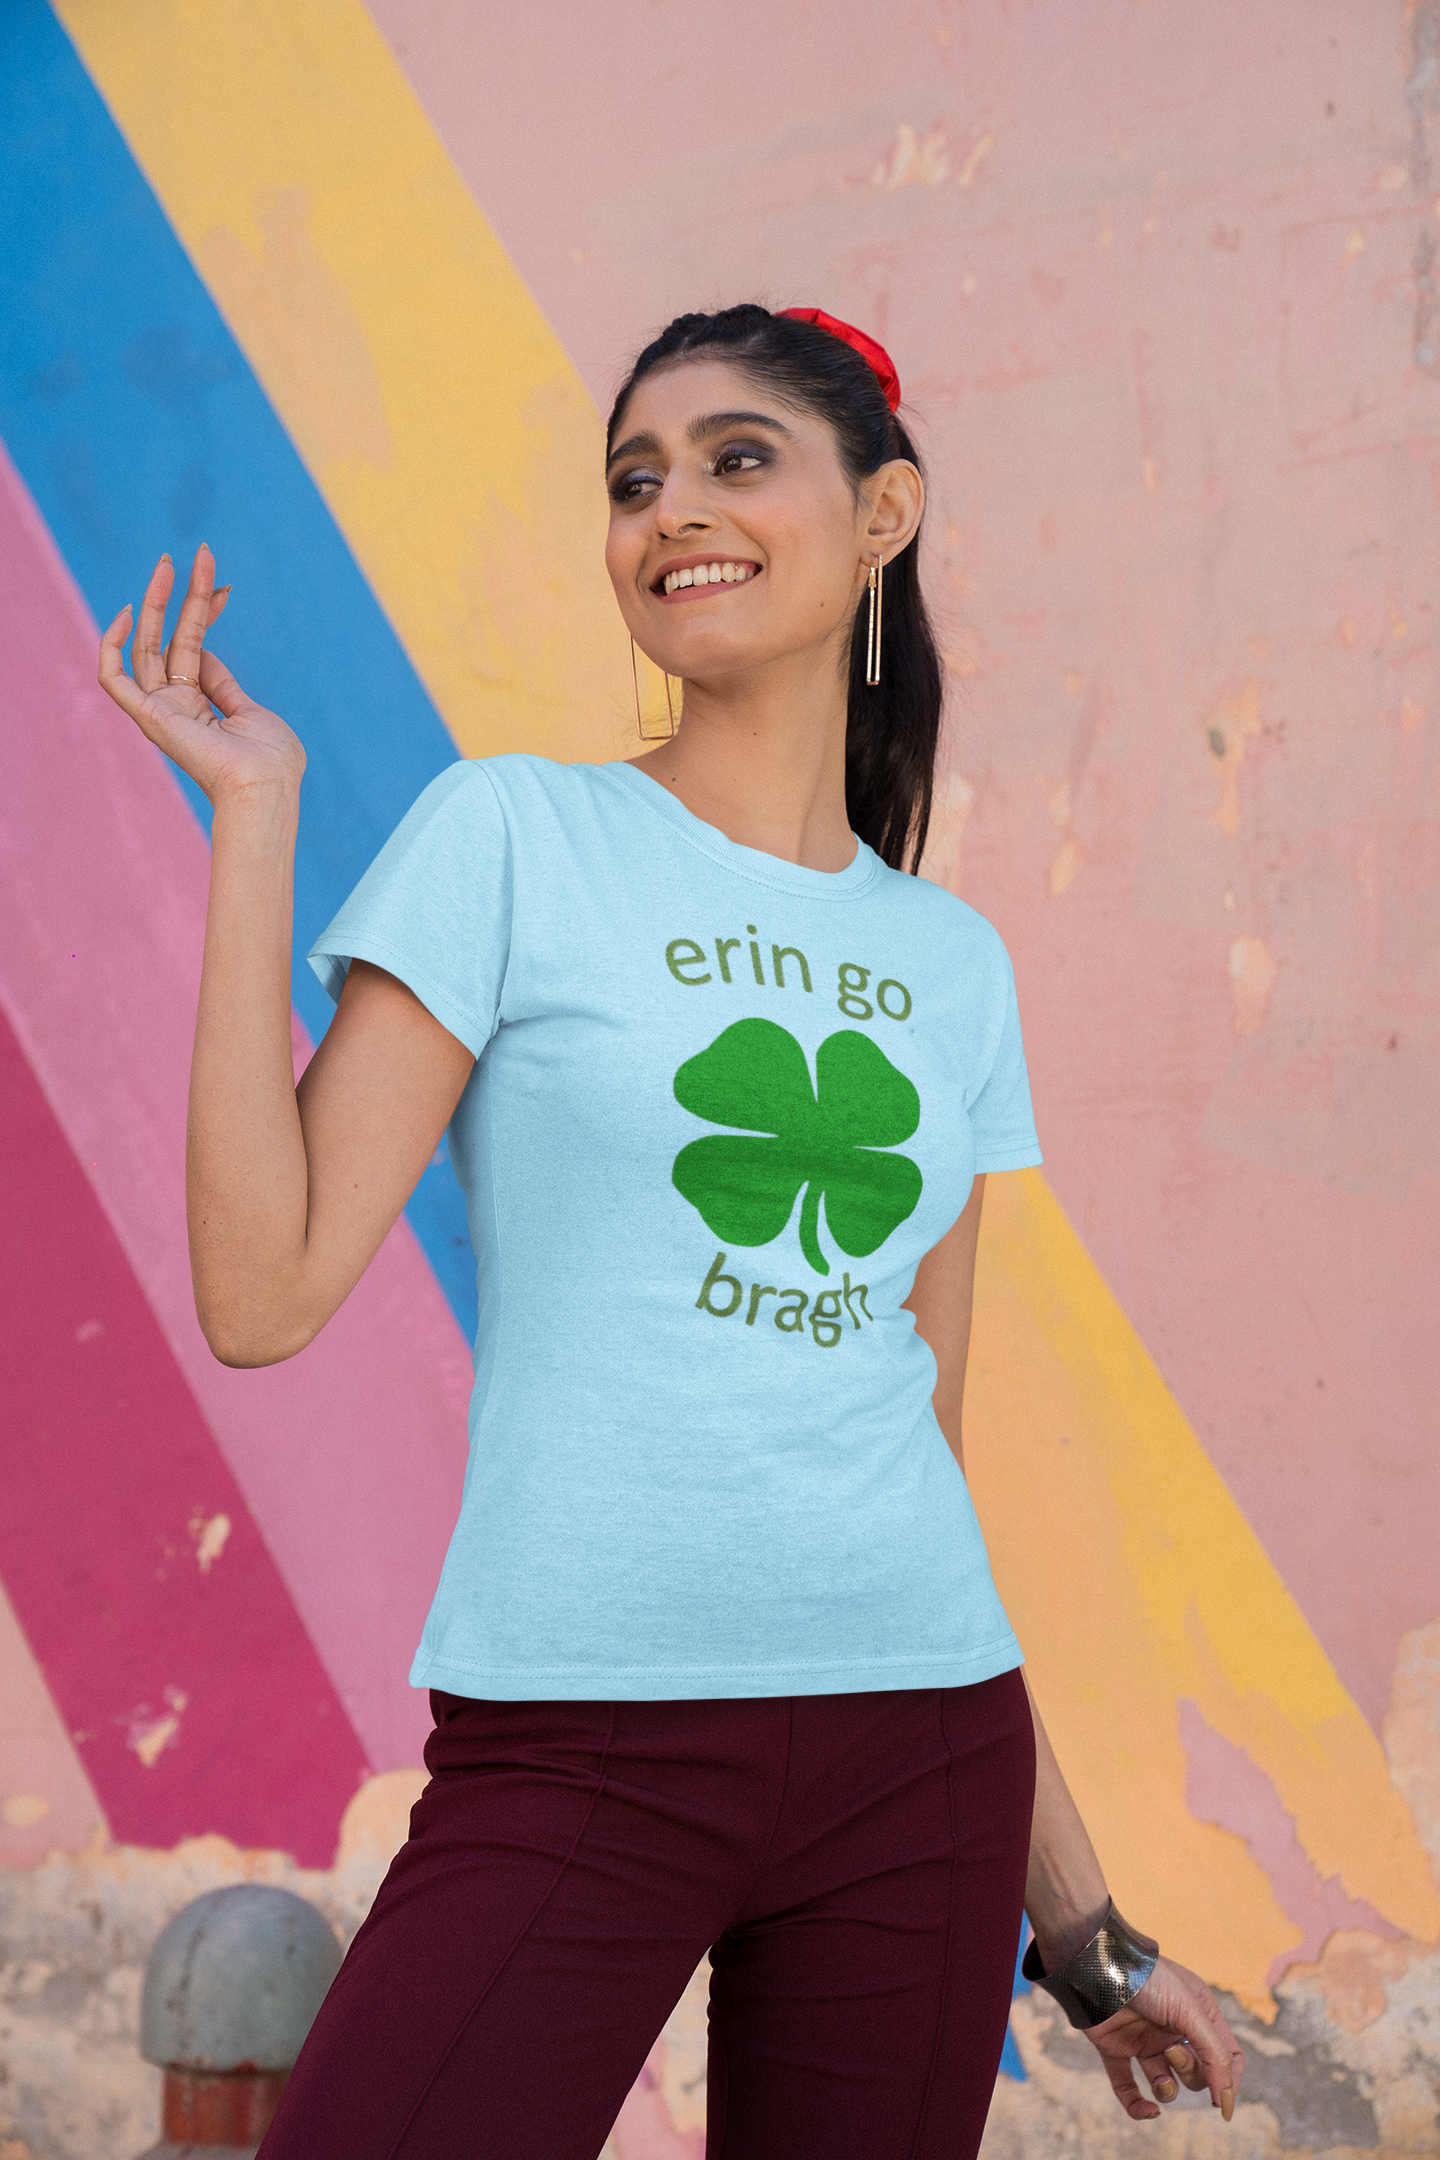 Firechick Designs "Erin Go Bragh" Women's Soft-style Tee Ireland Forever T-shirt St Patrick's Day